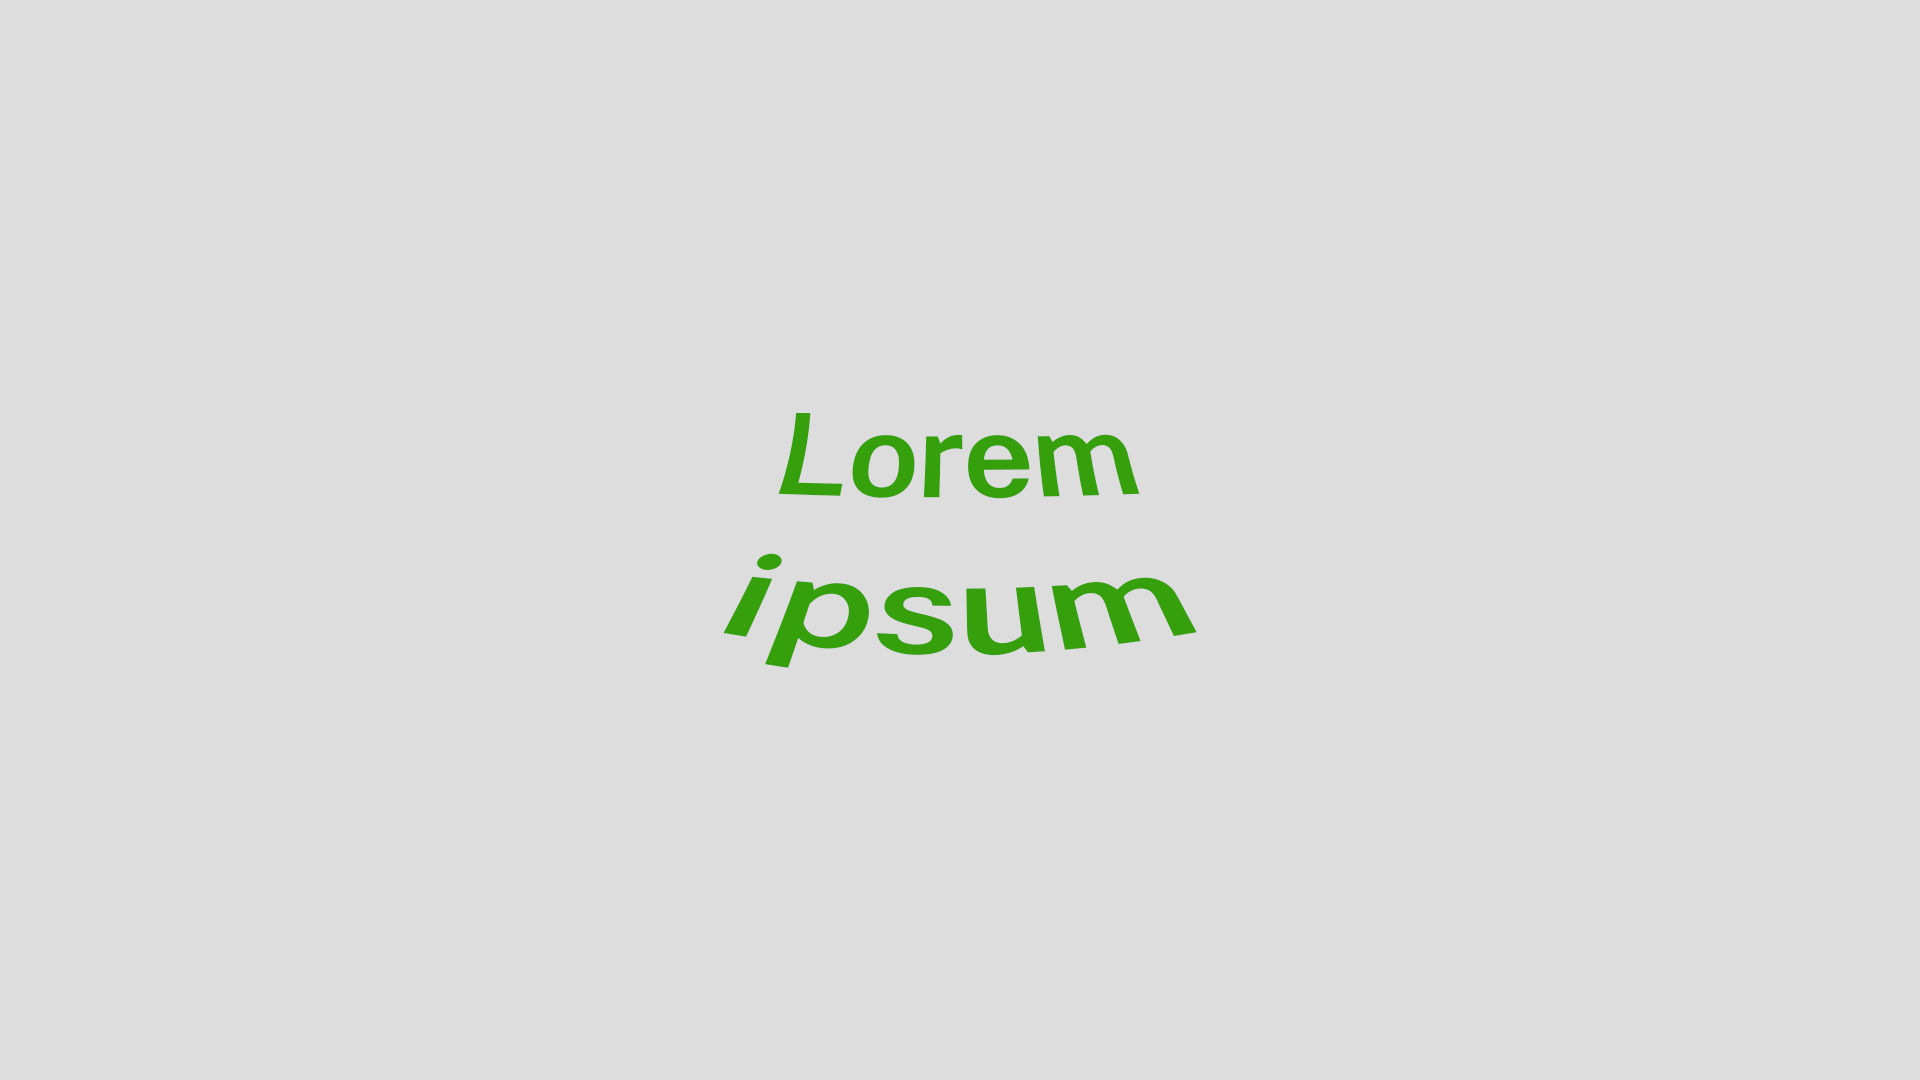 General 1920x1080 Lorem ipsum minimalism simple background typography digital art gray green